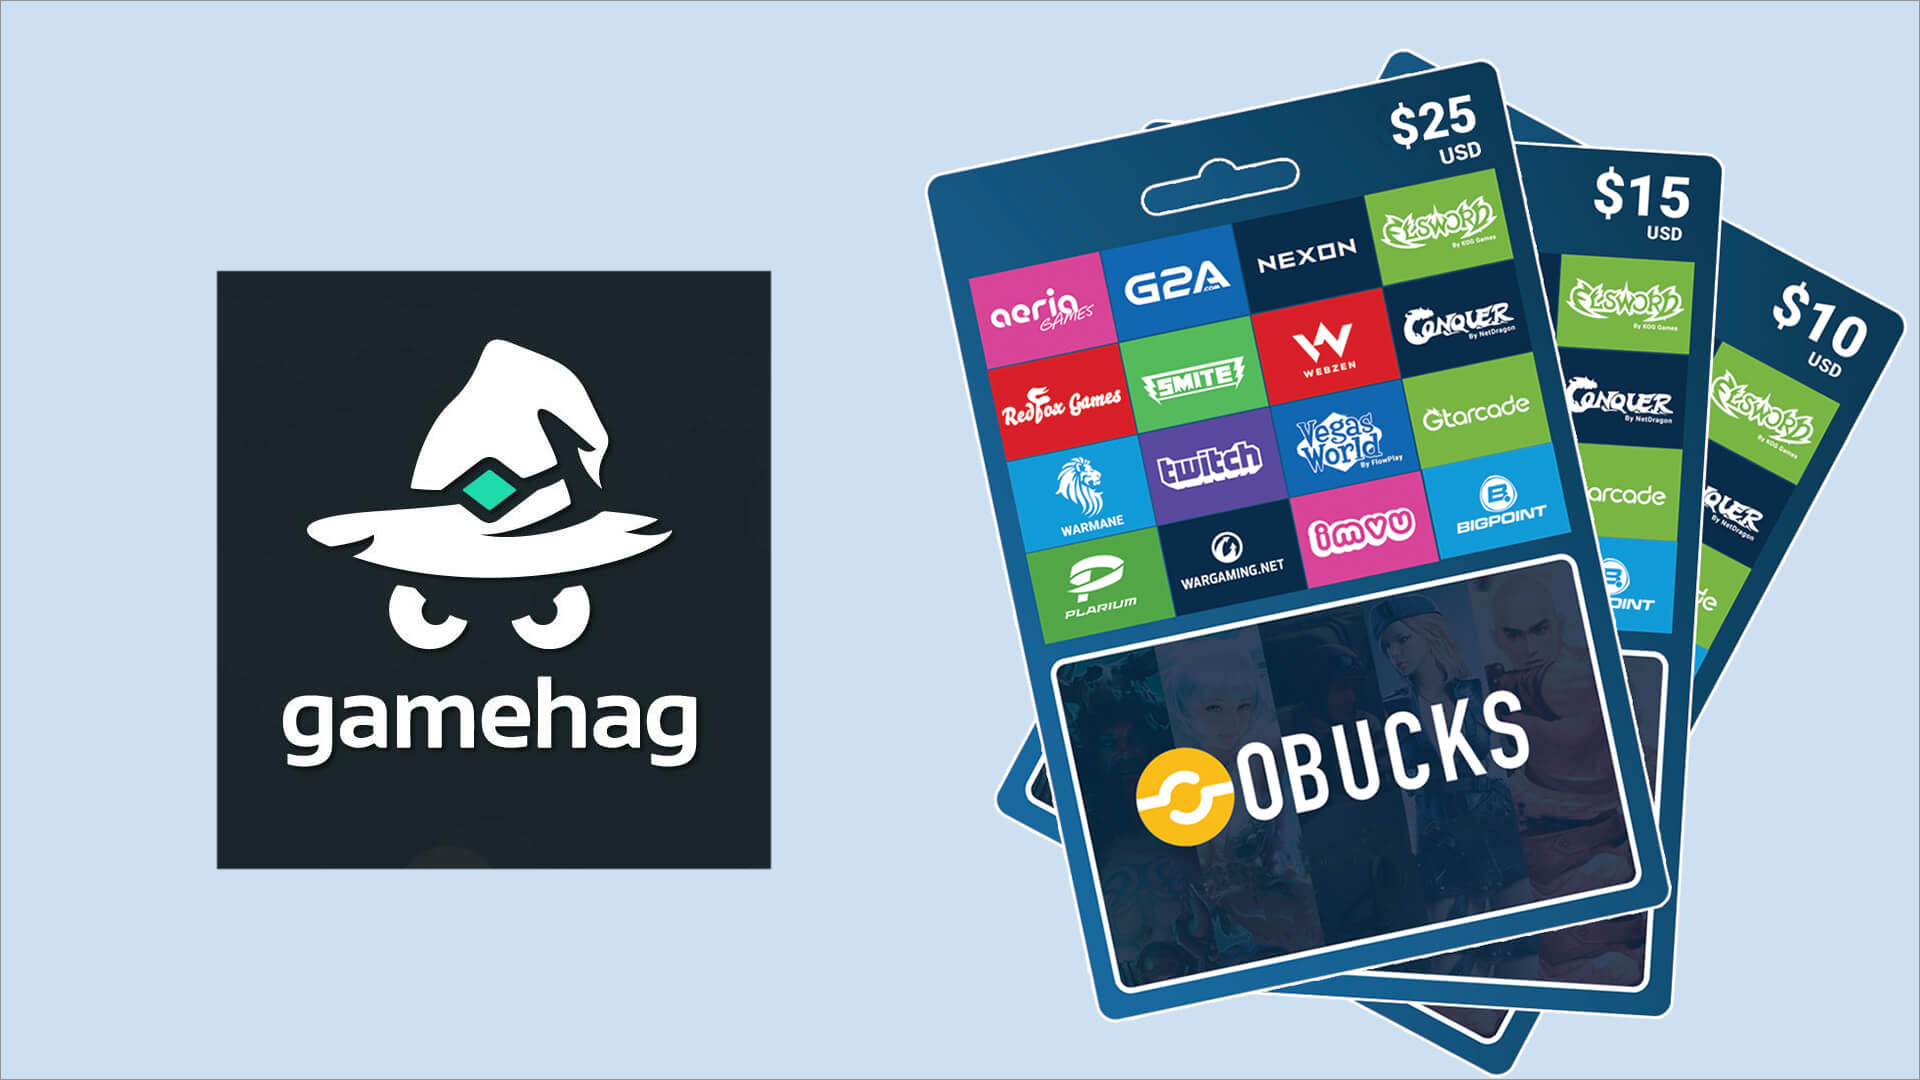 Buy an Obucks card on Gamehag gamhag.jpg